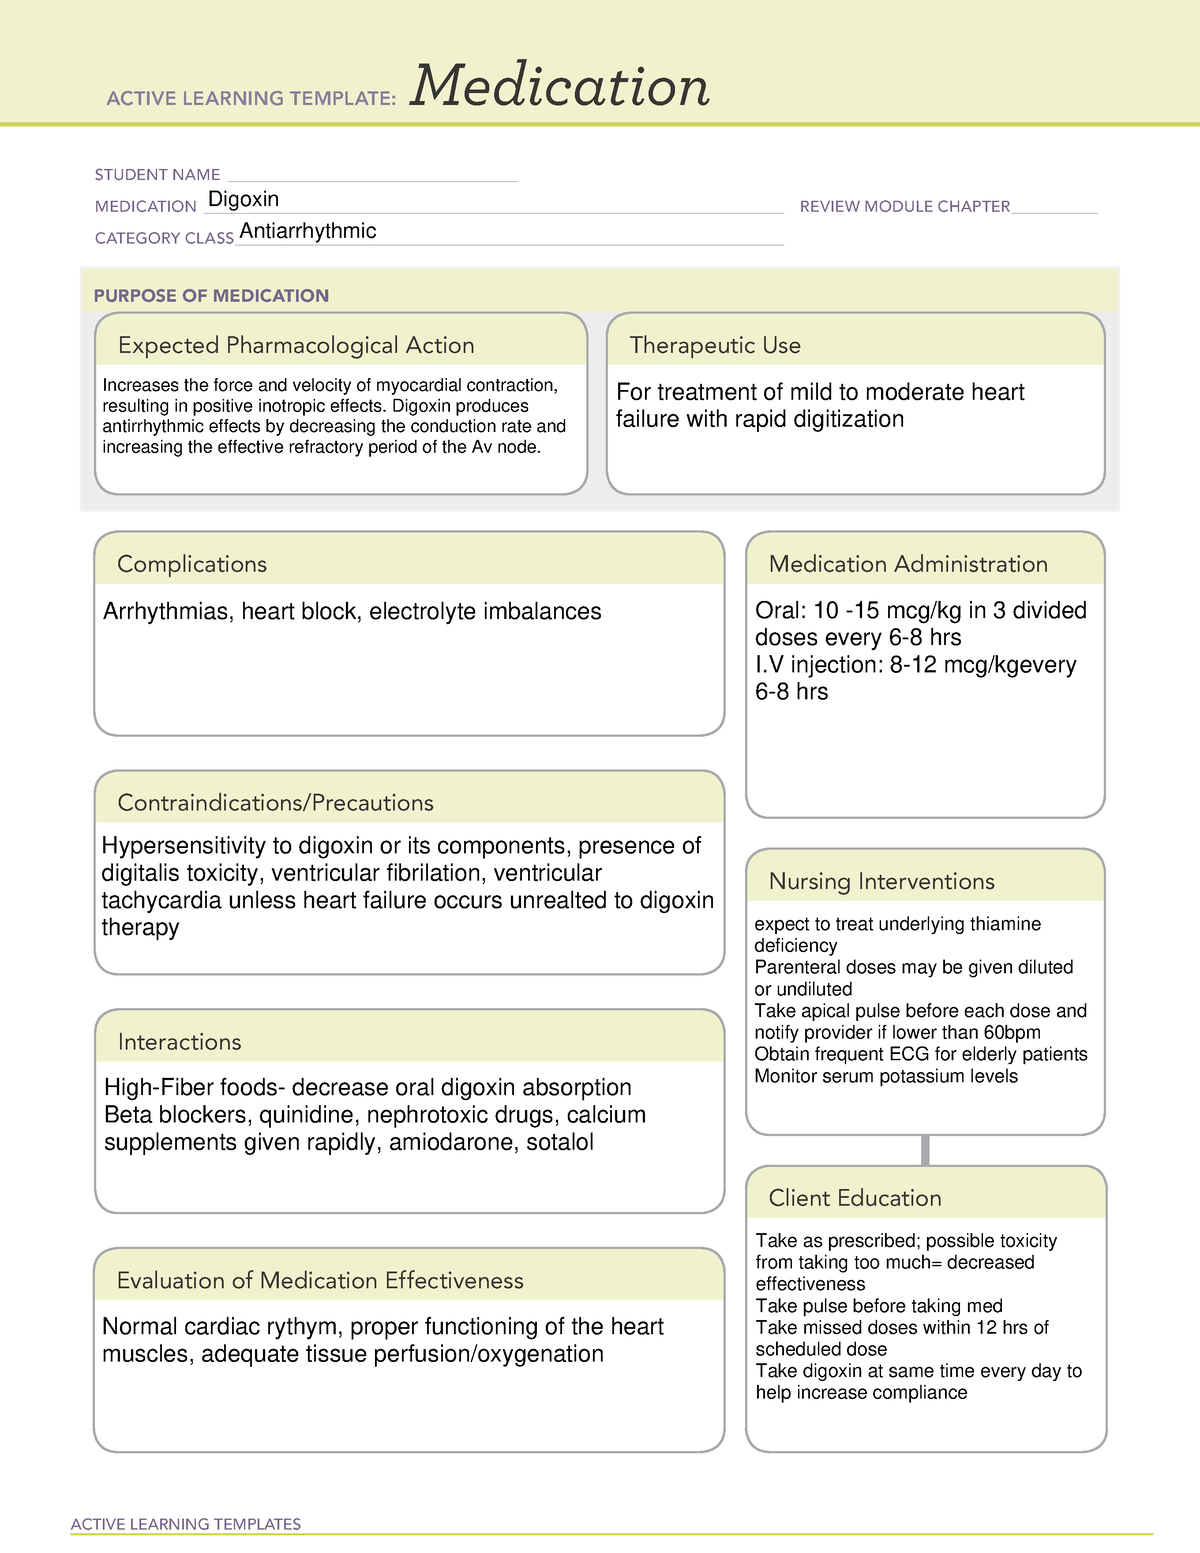 medication-template-digoxin-active-learning-templates-medication